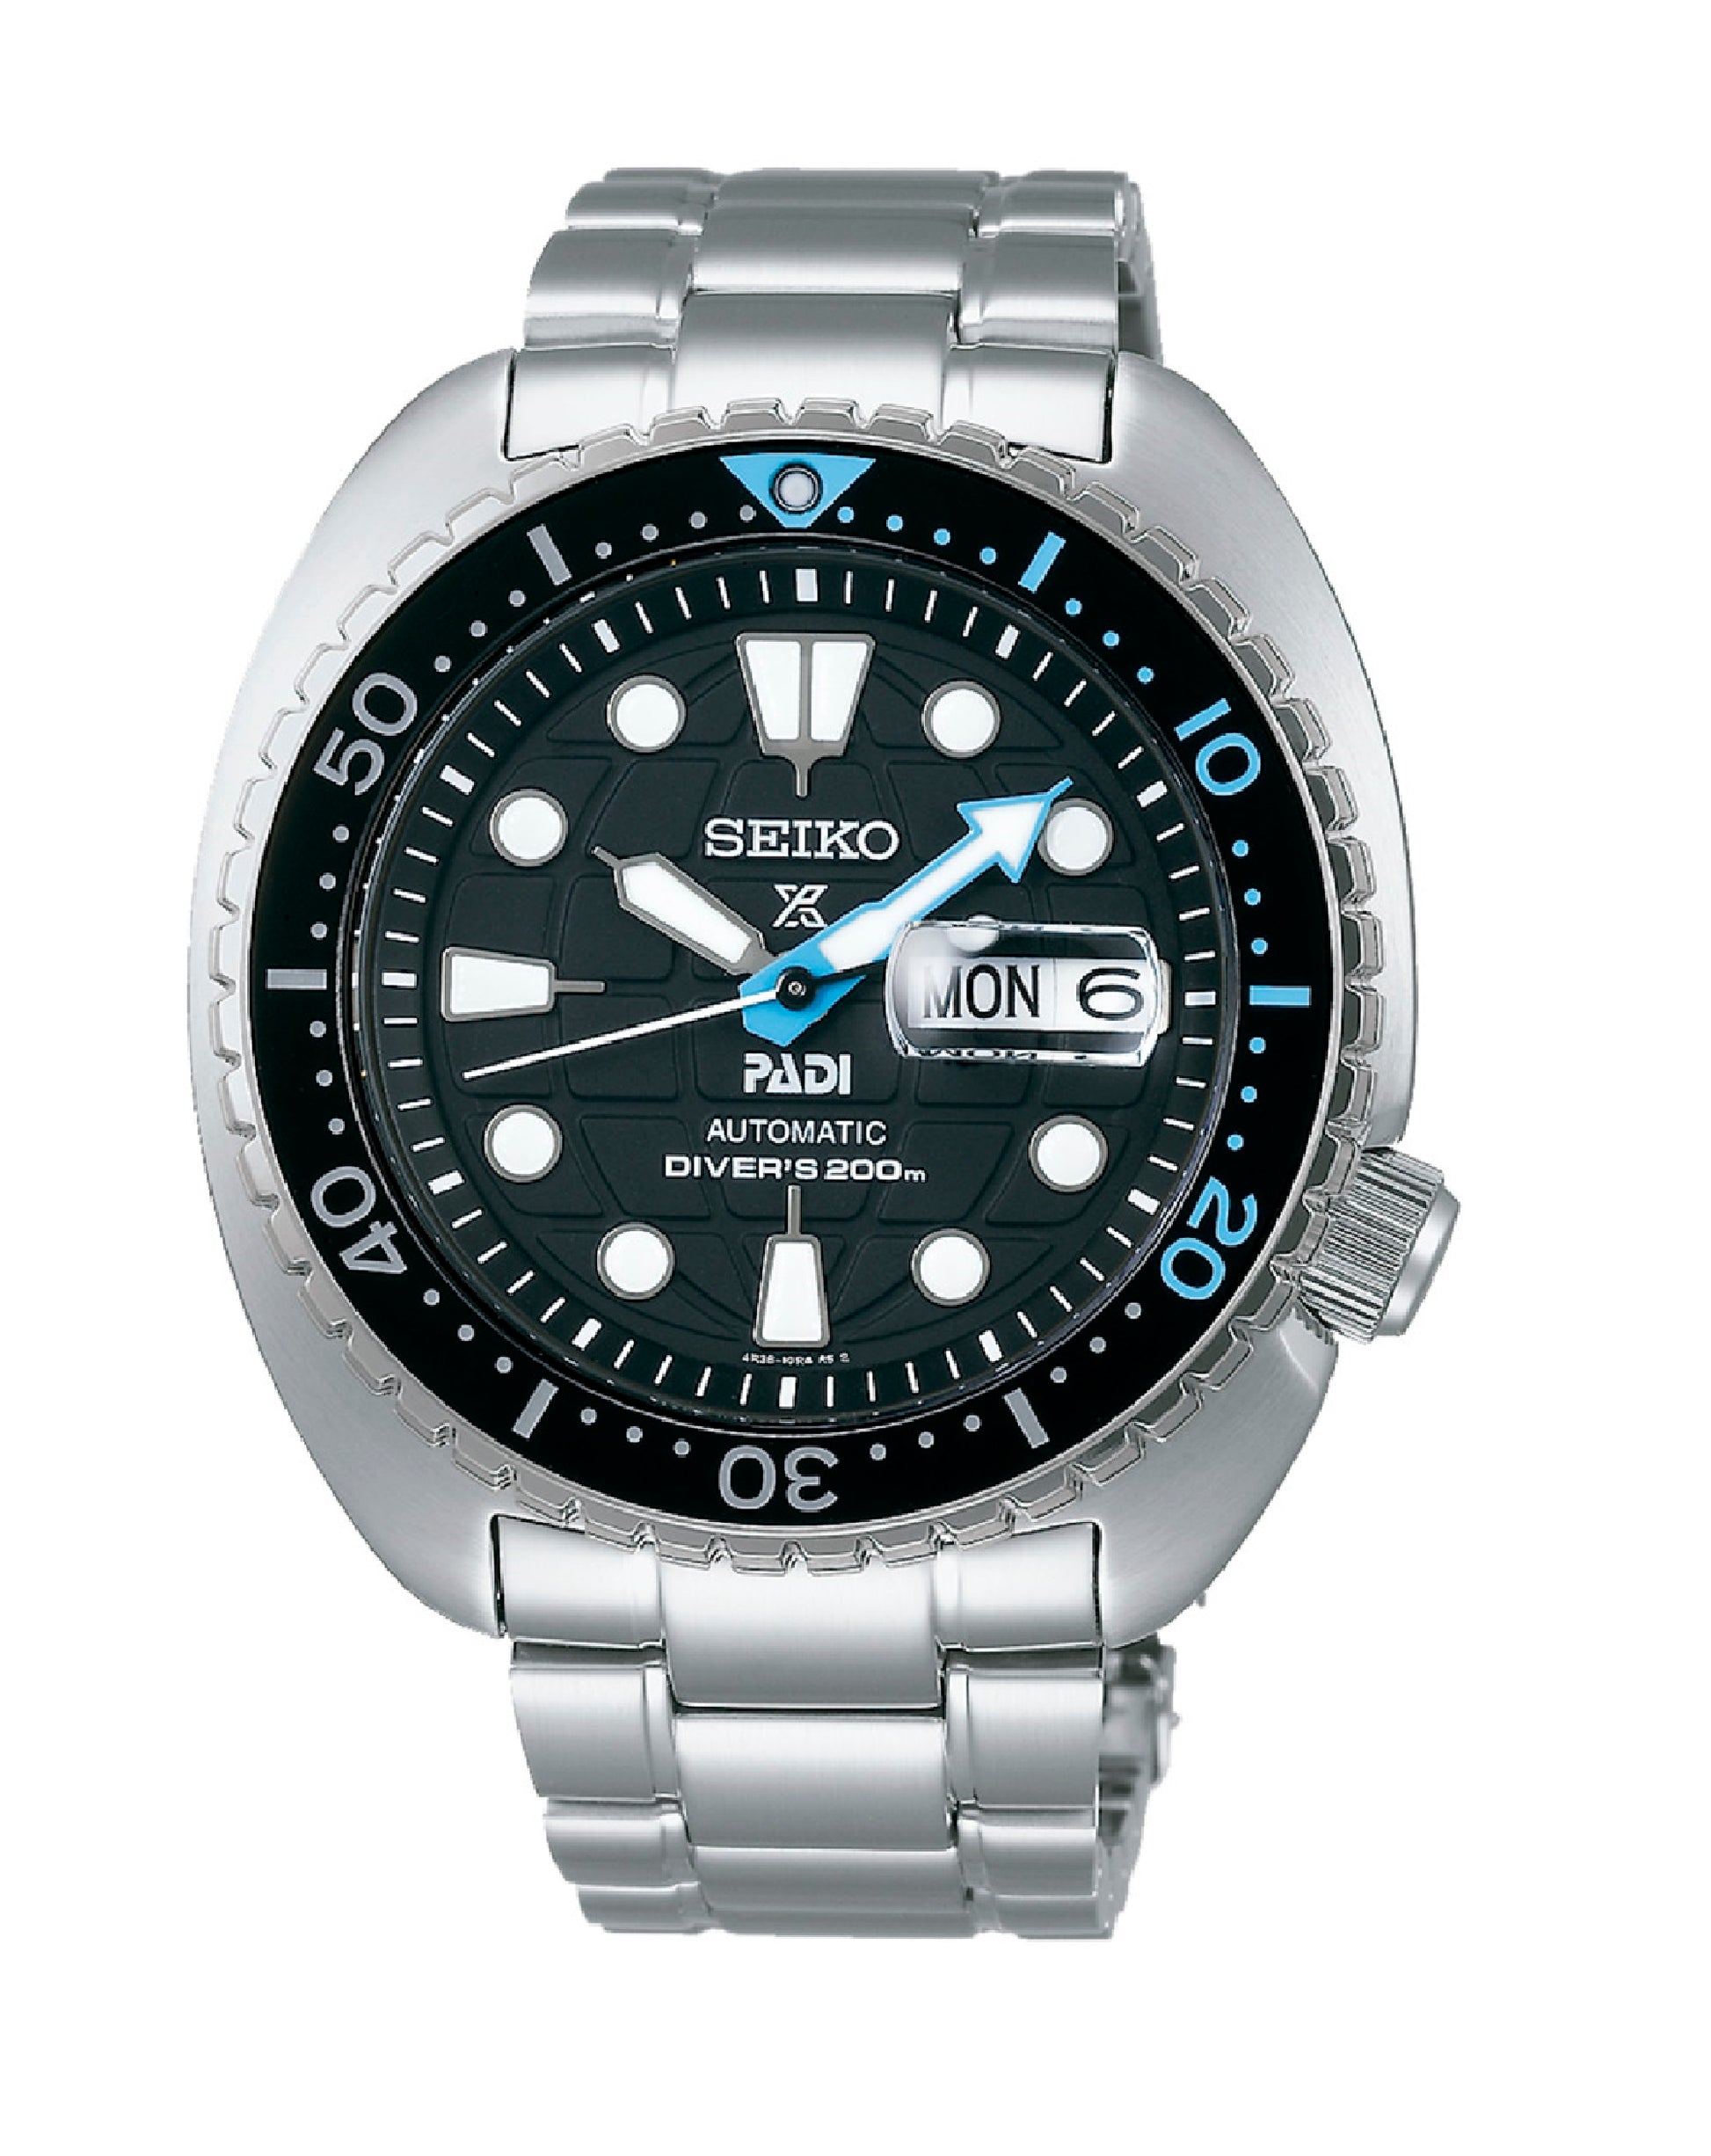 Seiko SRPG19K1 Seiko Prospex PADI Watch